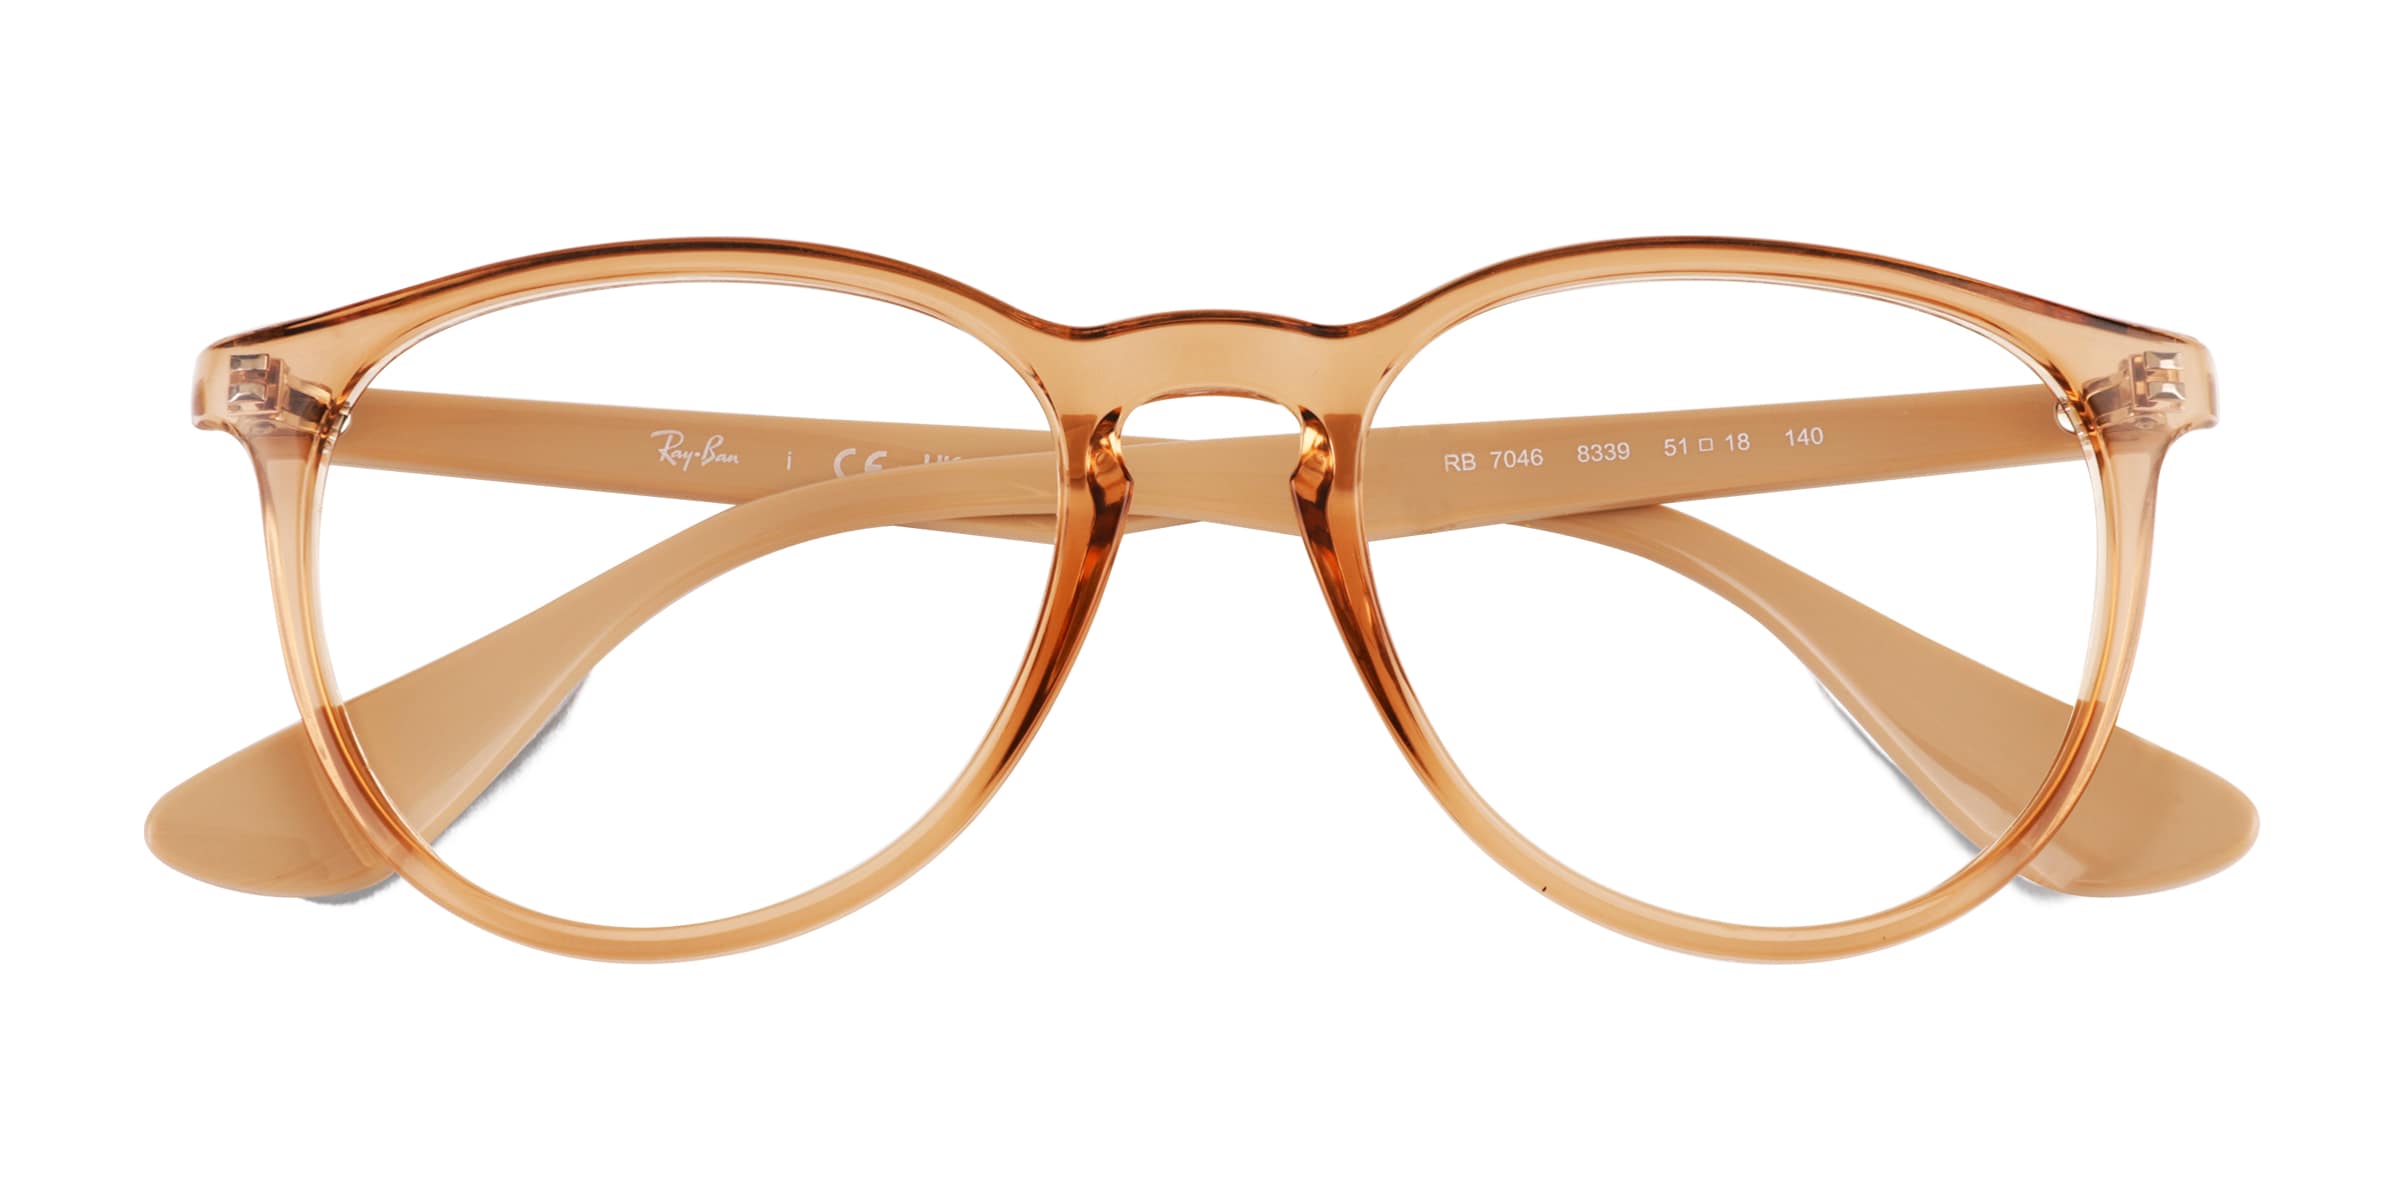 Ray-Ban RB7046 - Round Transparent Brown Frame Eyeglasses 